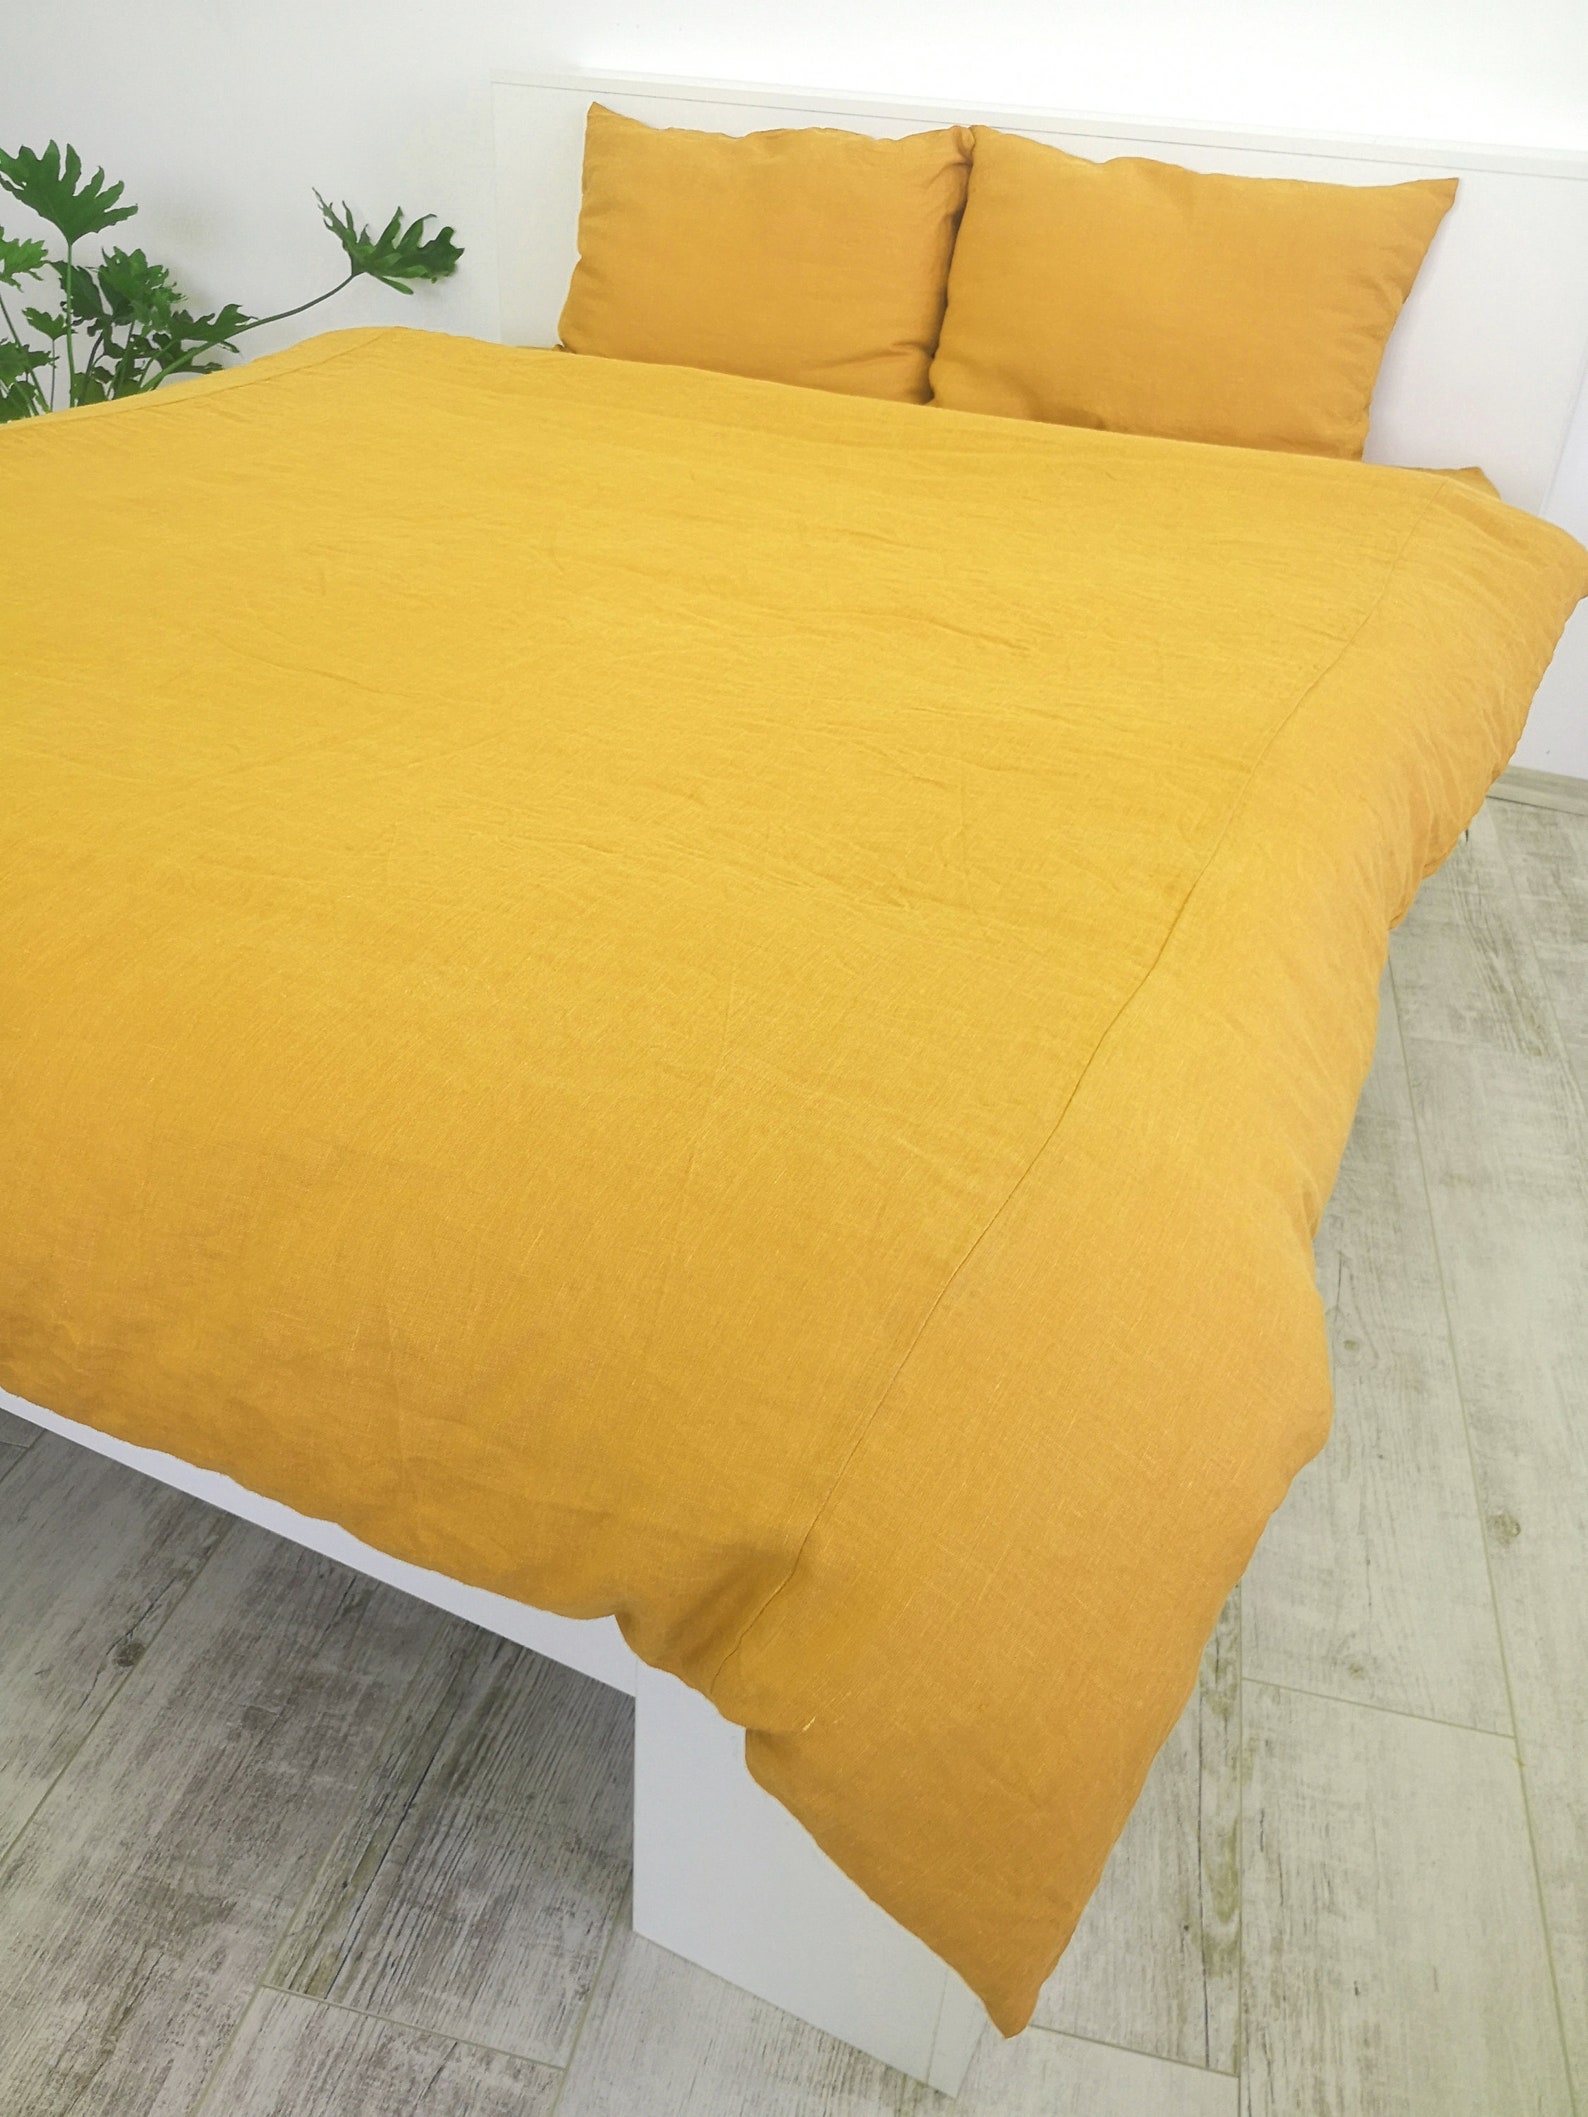 Bright yellow linen bedding set / 1 Duvet cover 2 | Etsy